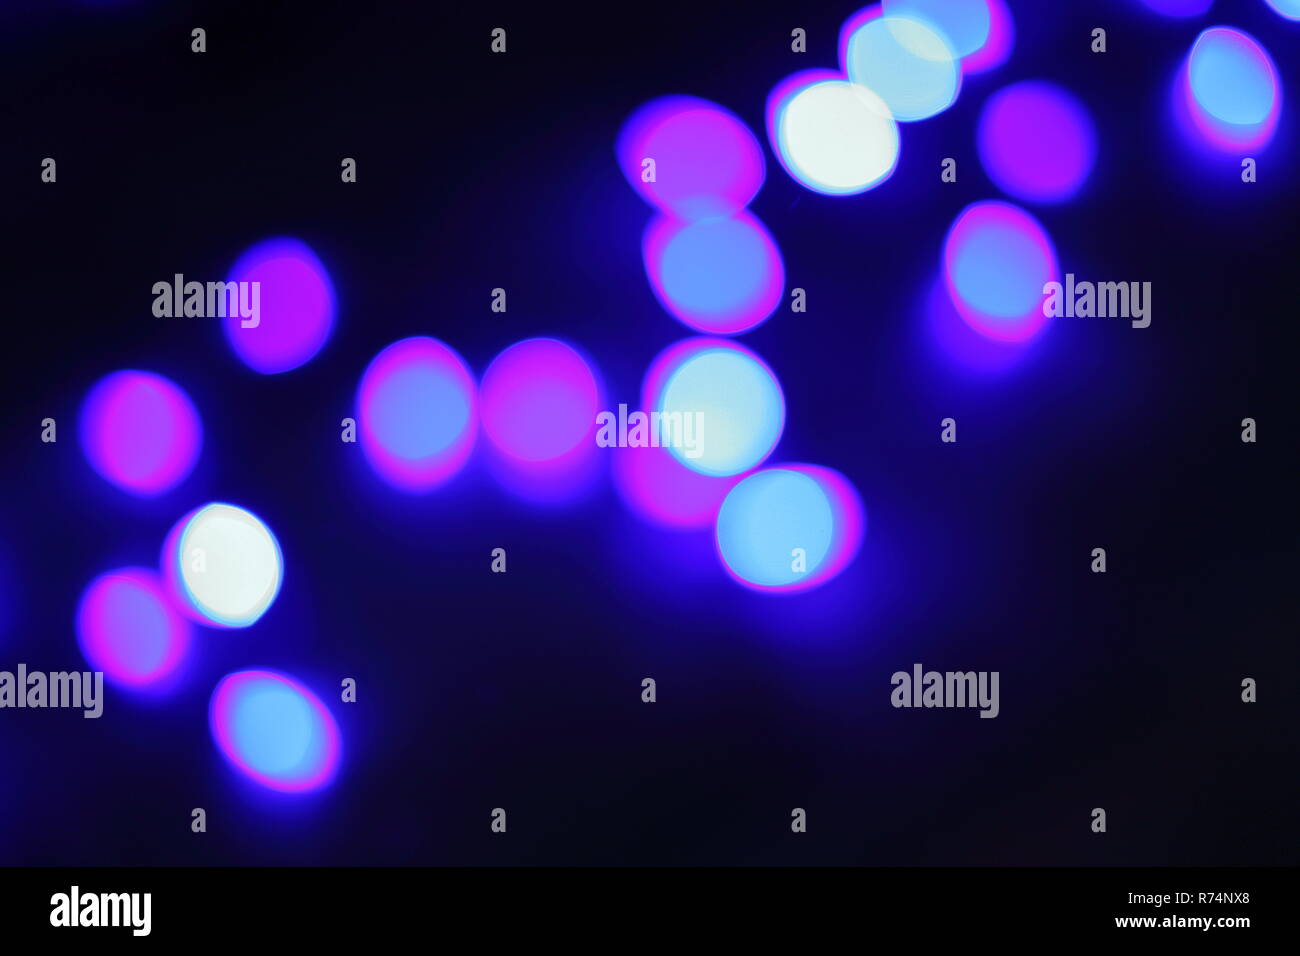 Bokeh effect of purple/blue holiday lights Stock Photo